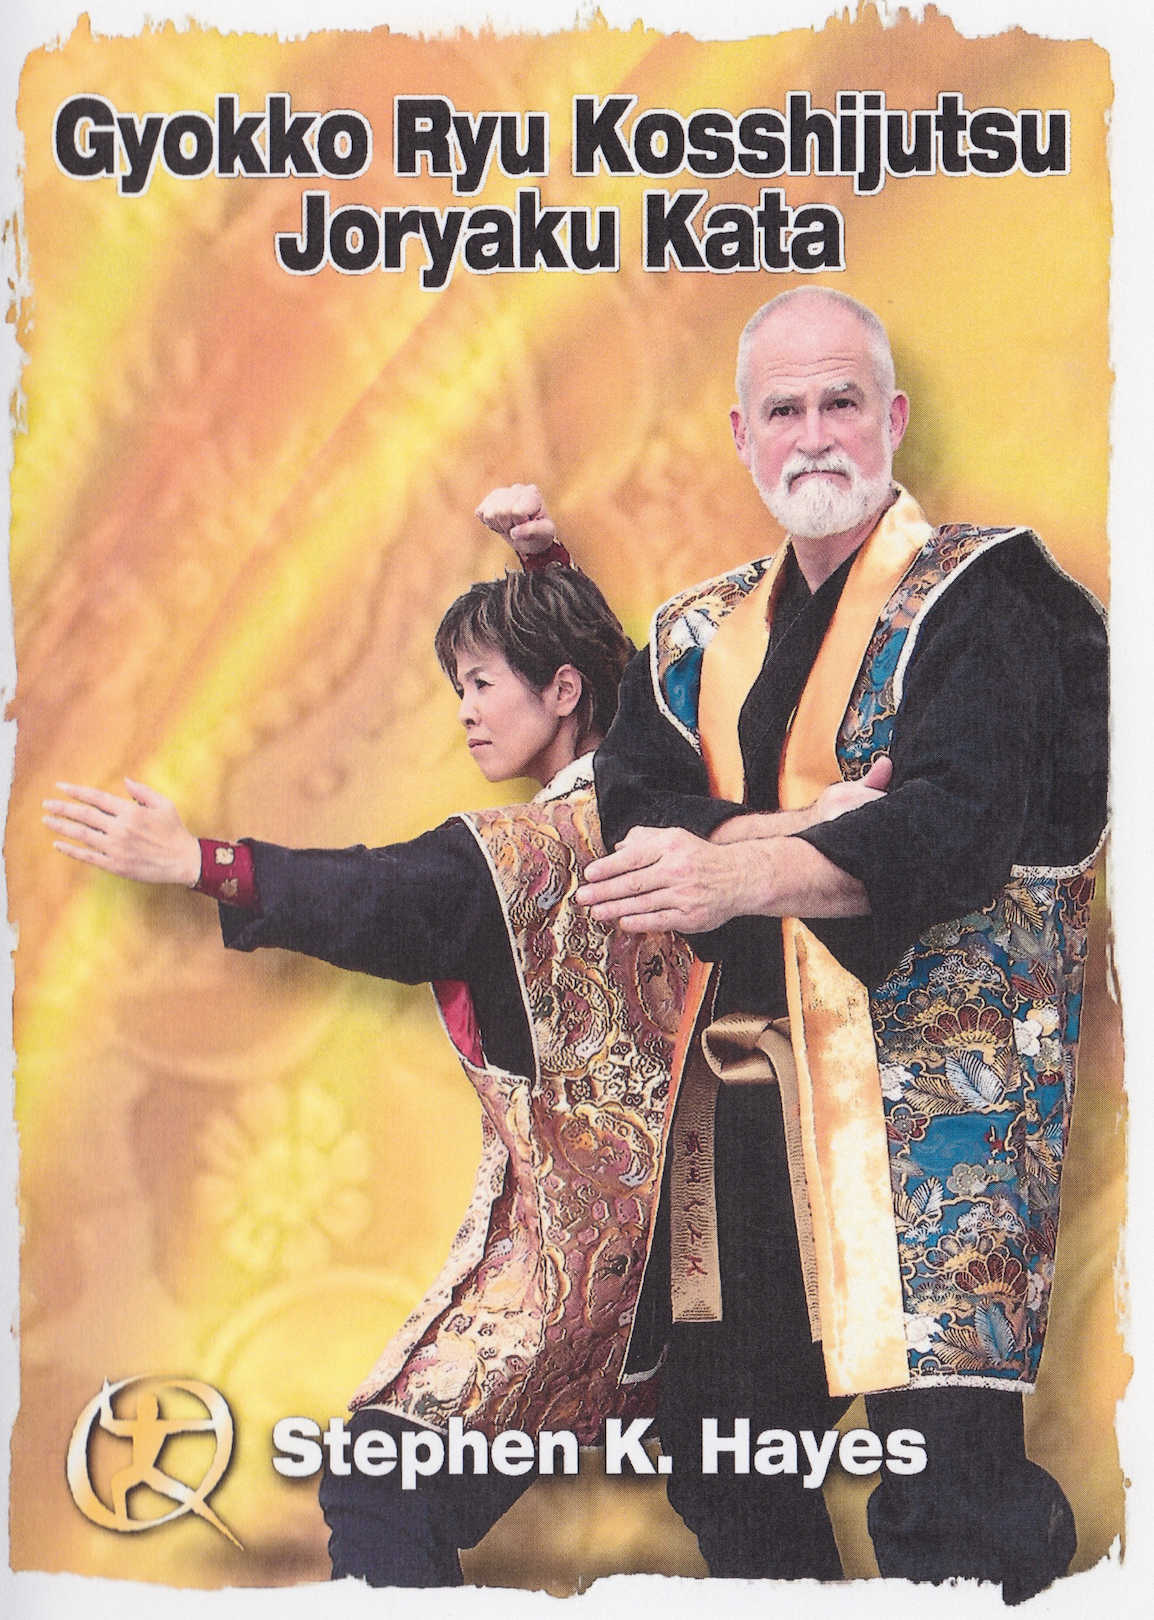 Gyokko Ryu Kata from the Shoden Scrolls 6 DVD Set by Stephen Hayes